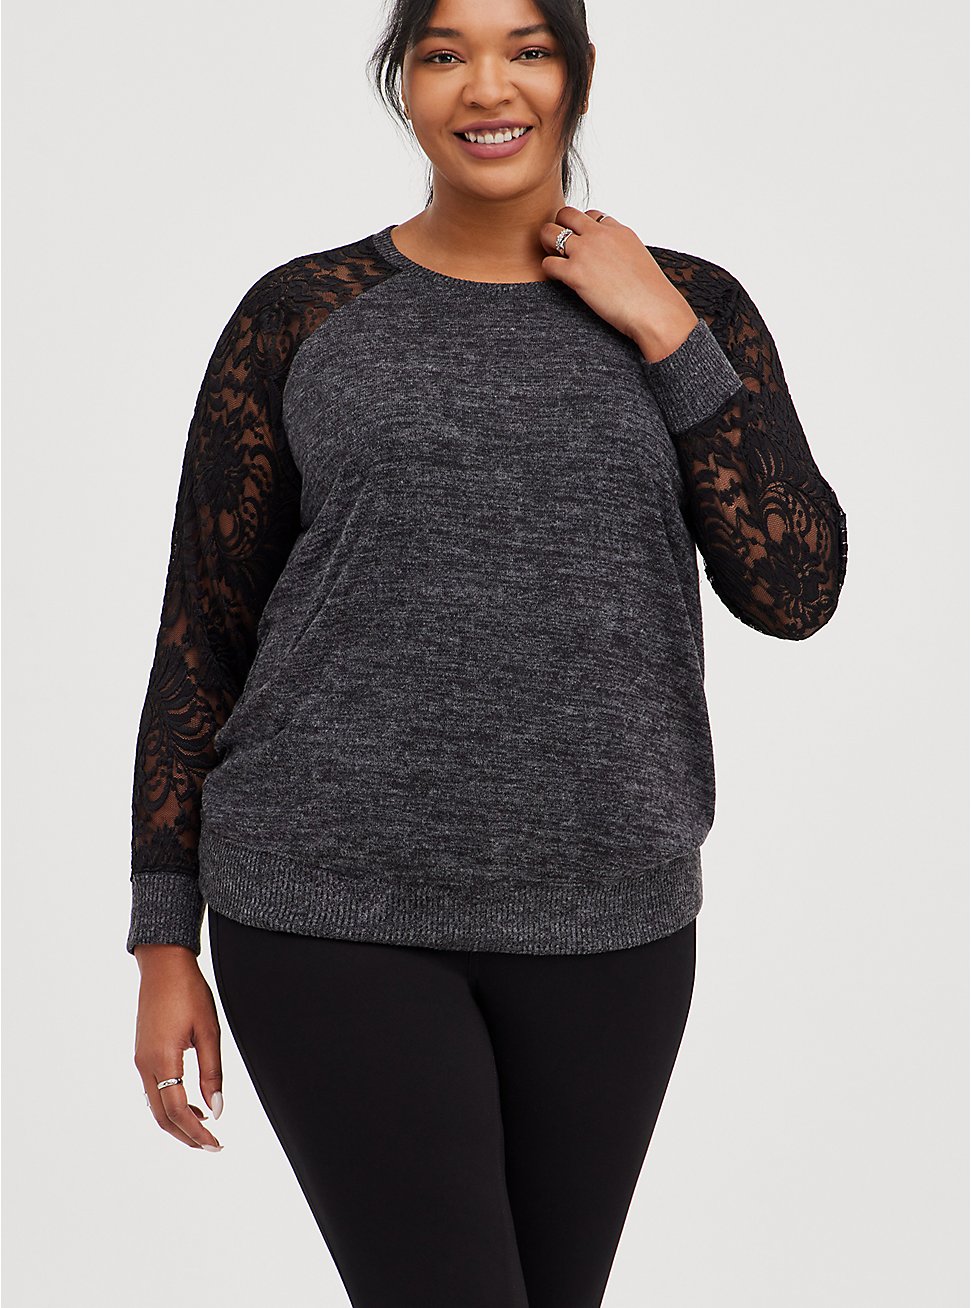 Lace Sleeve Raglan Sweatshirt - Super Soft Plush Black, DEEP BLACK, hi-res